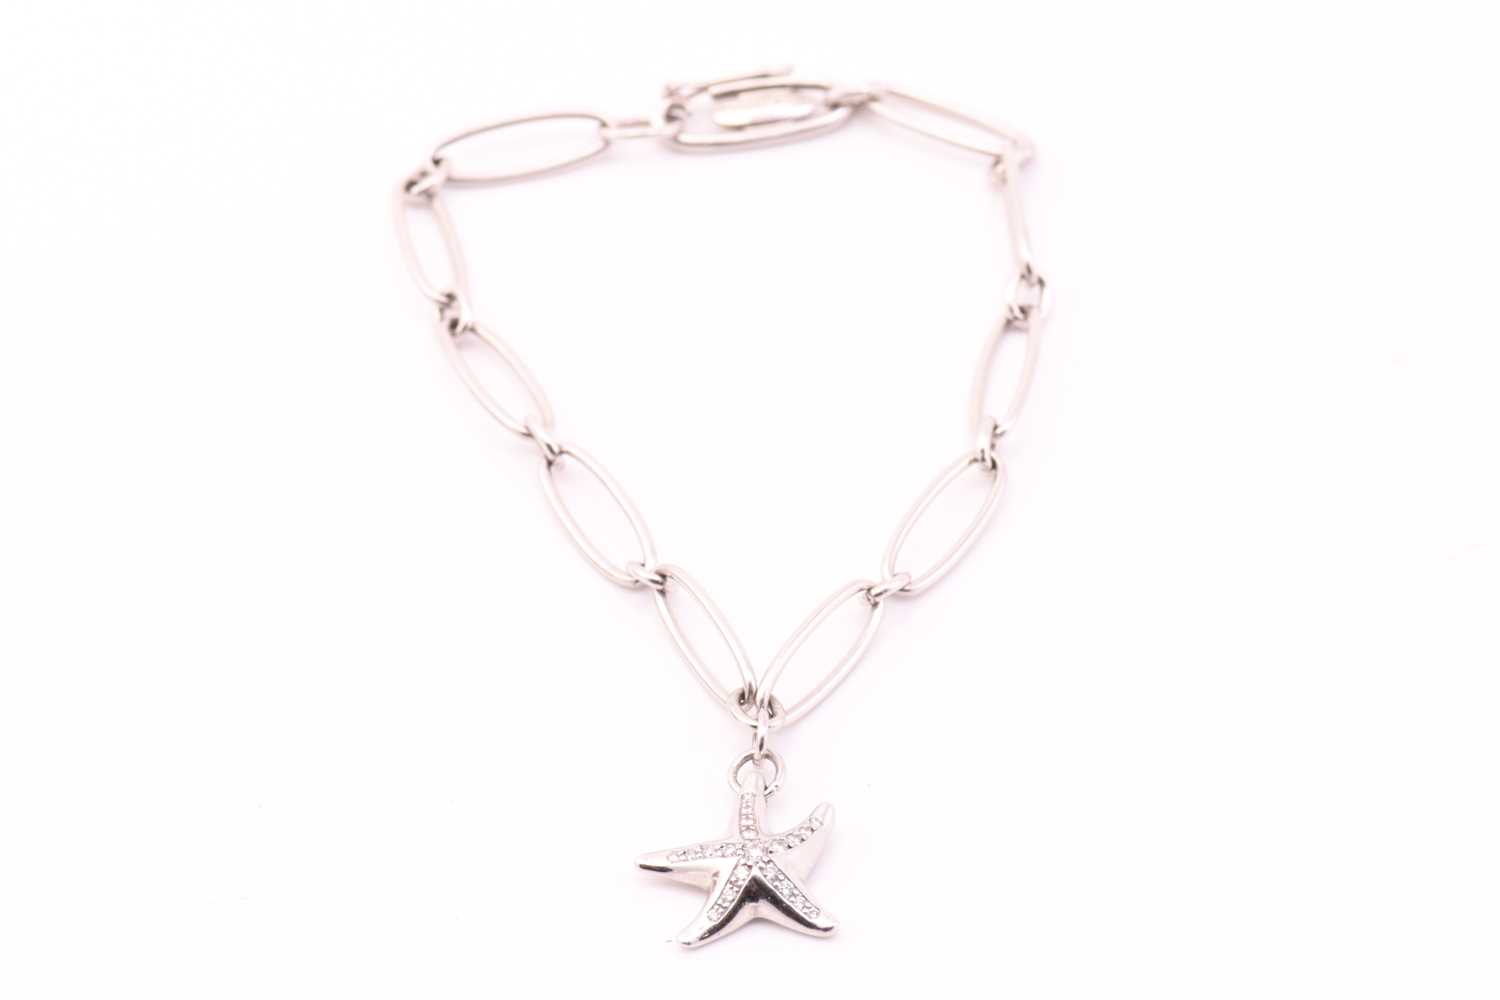 Lot 13 - Tiffany & Co. - A platinum charm bracelet with...